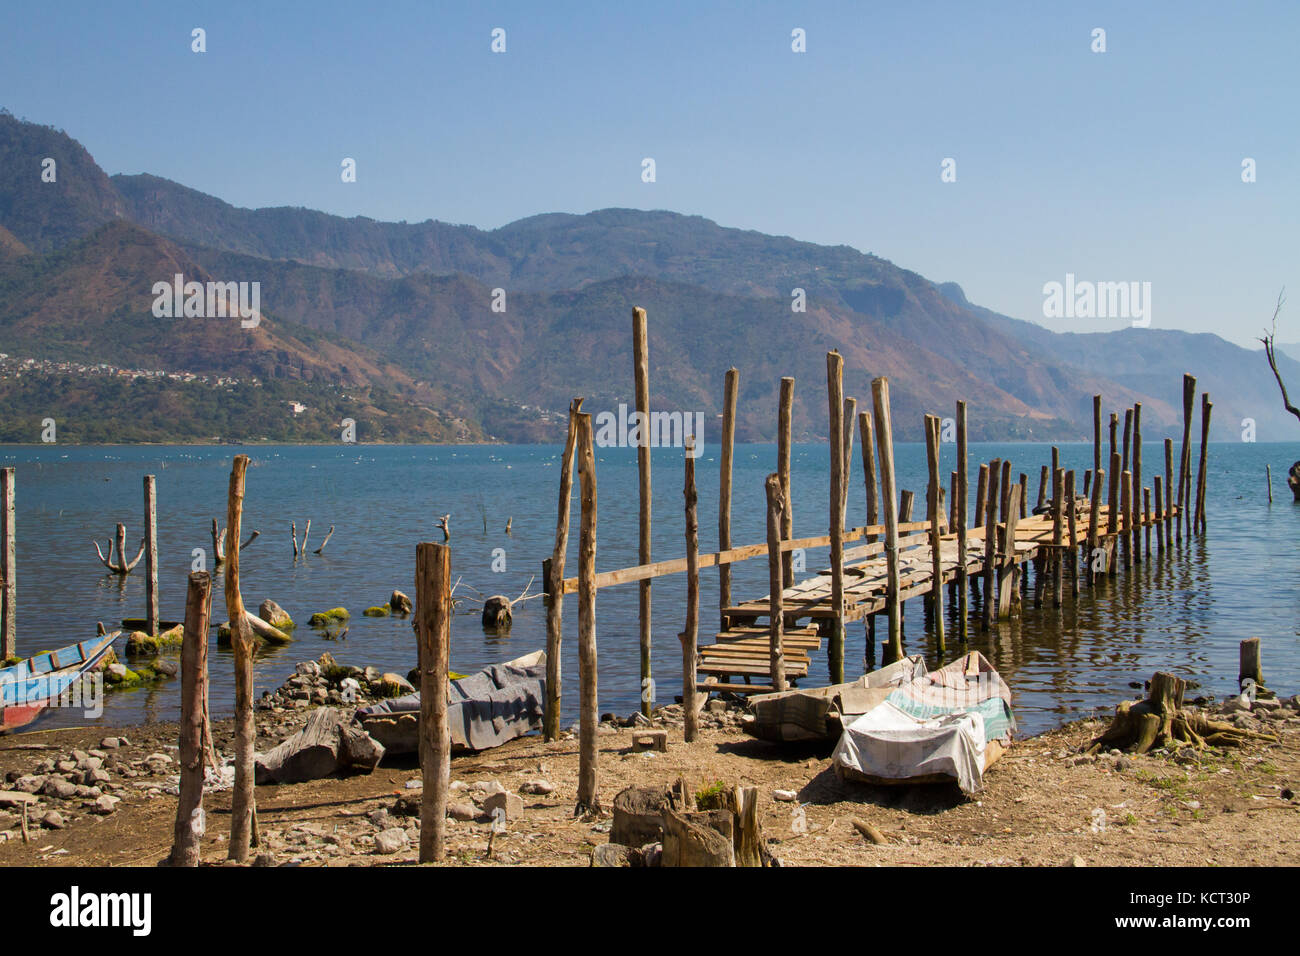 Wooden jetty on edge of the lake, Lake Atitlan, Guatemala, 2017 Stock Photo